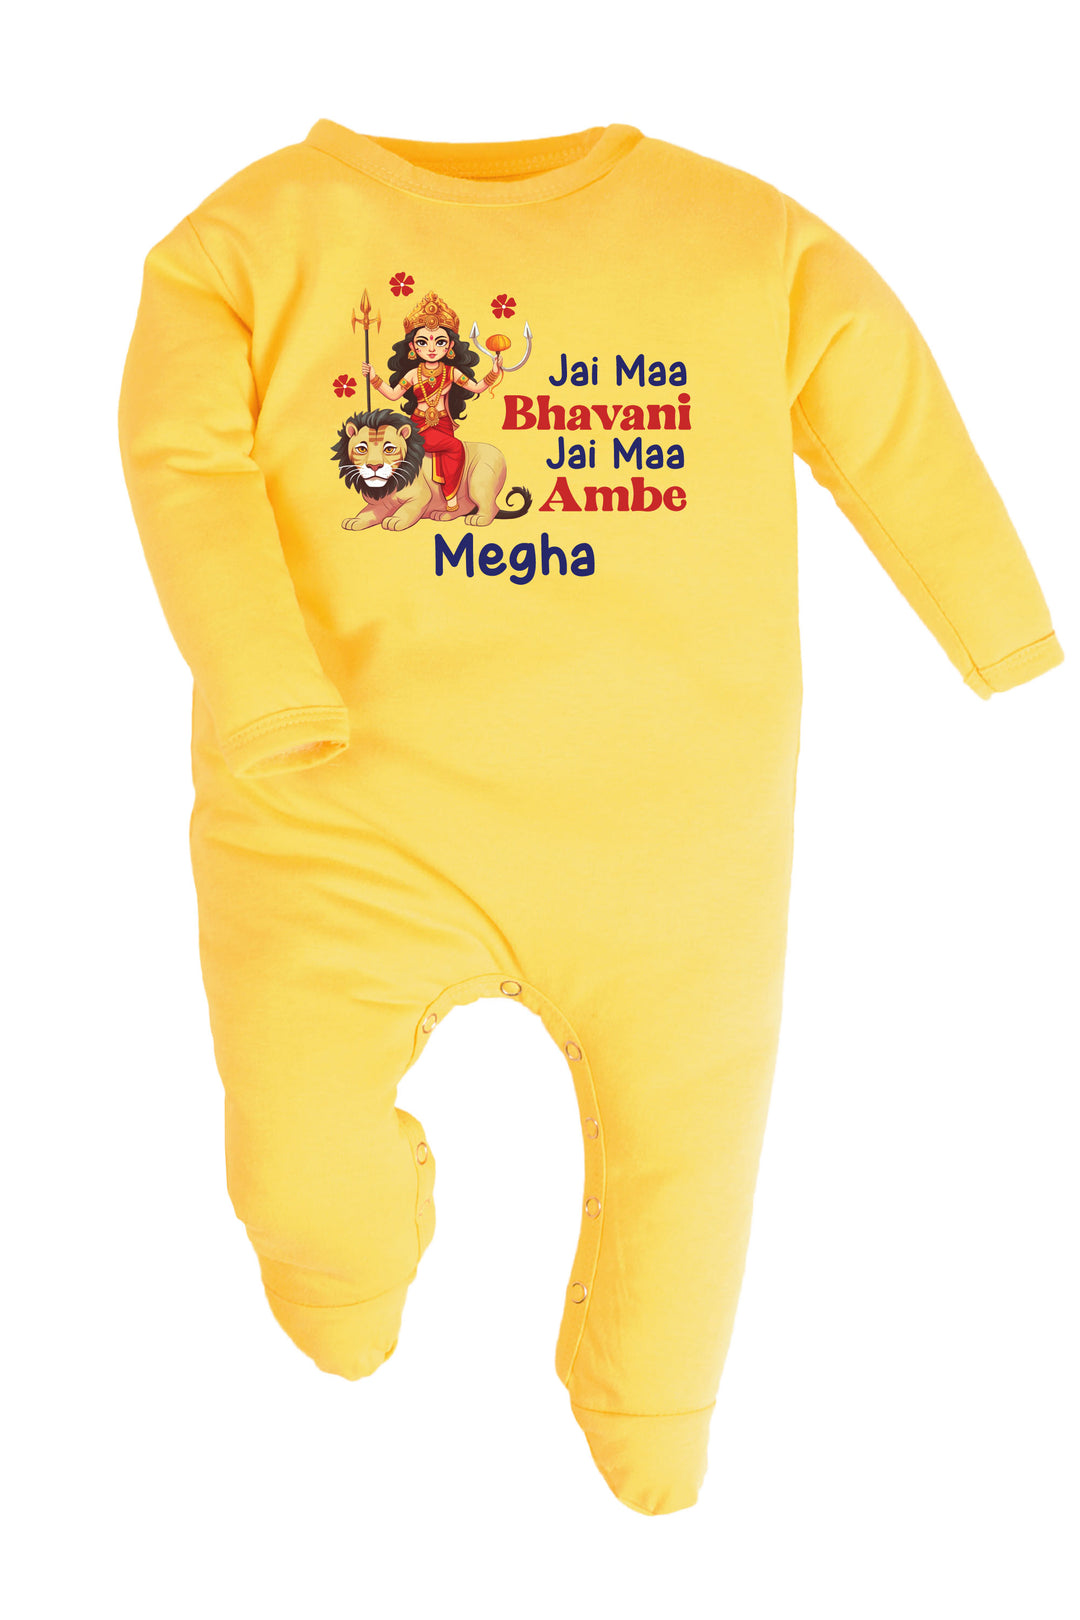 Jai Maa Bhavani Jai Maa Ambe Baby Romper | Onesies w/ Custom Name